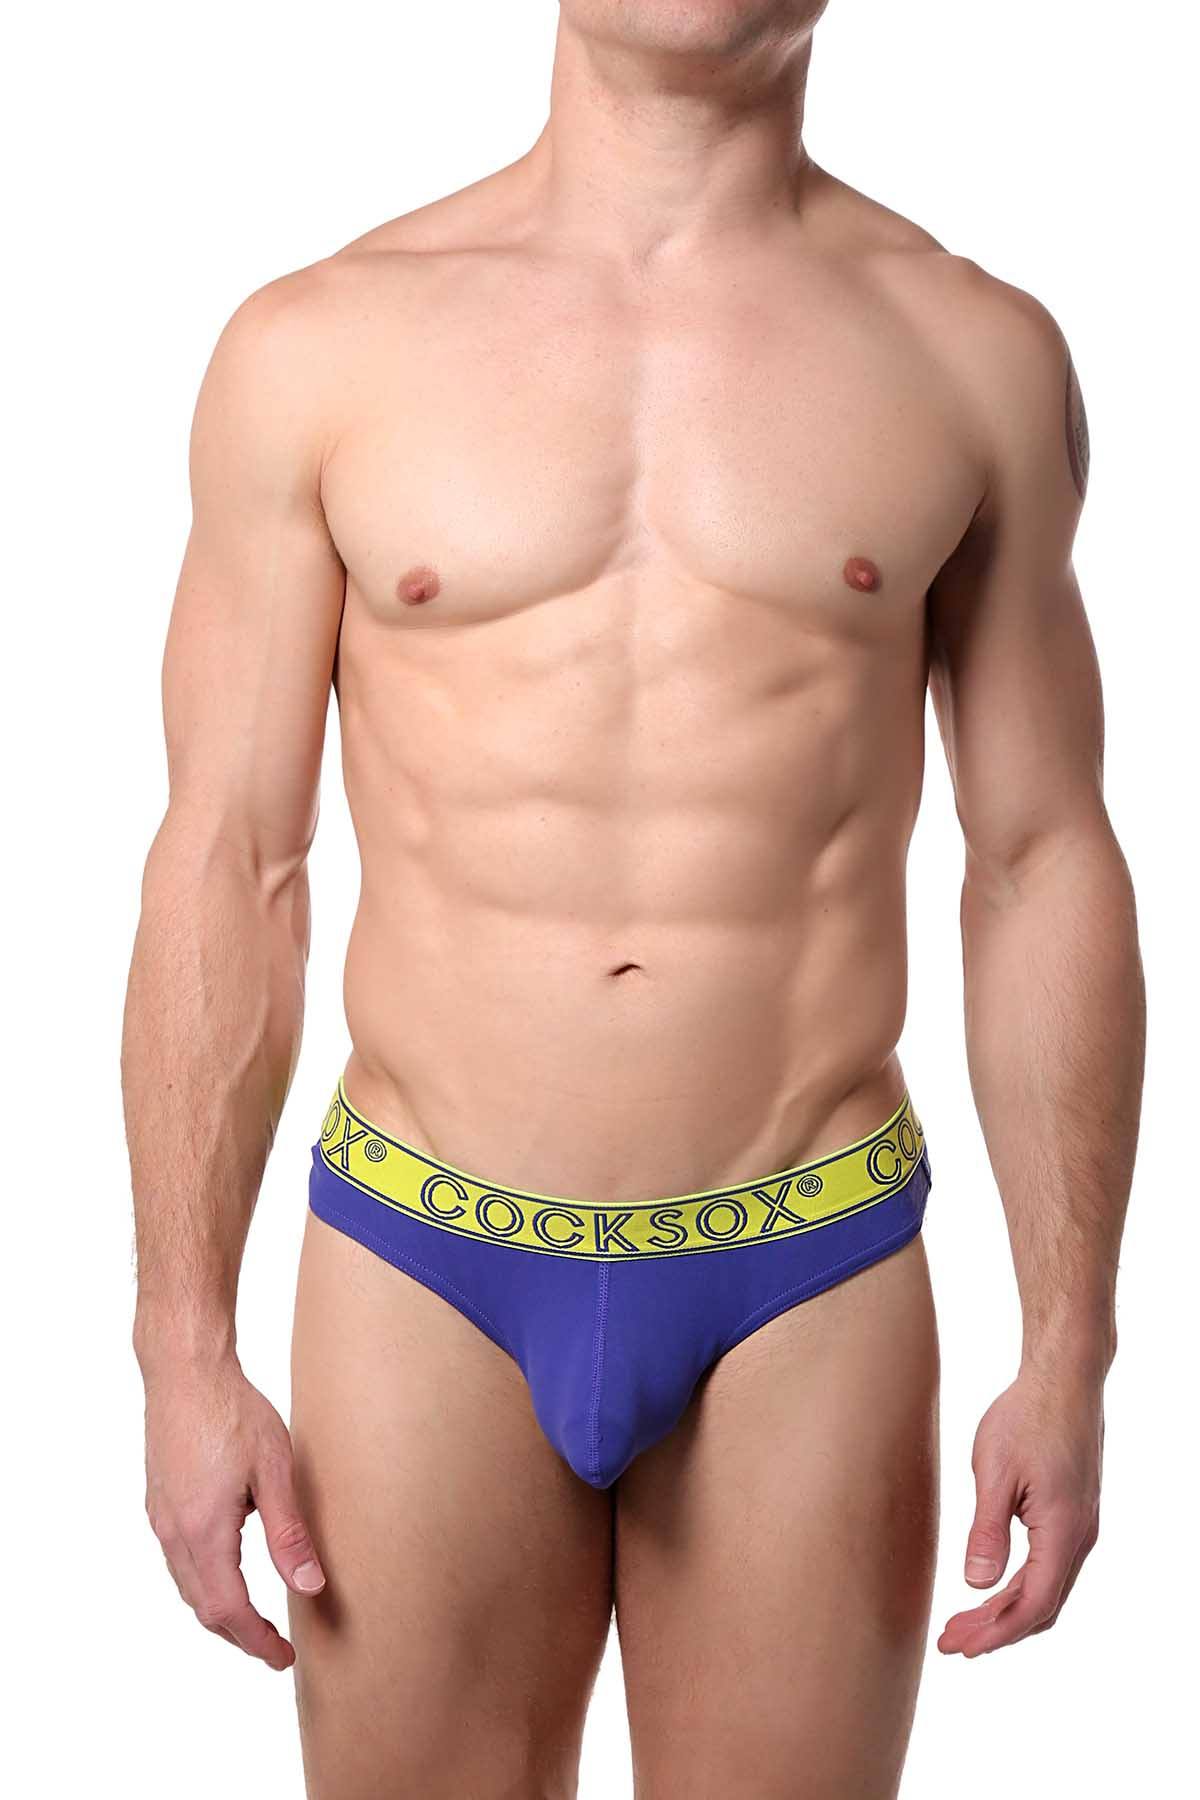 Cocksox Crystal-Blue Snug-Pouch Sports Thong